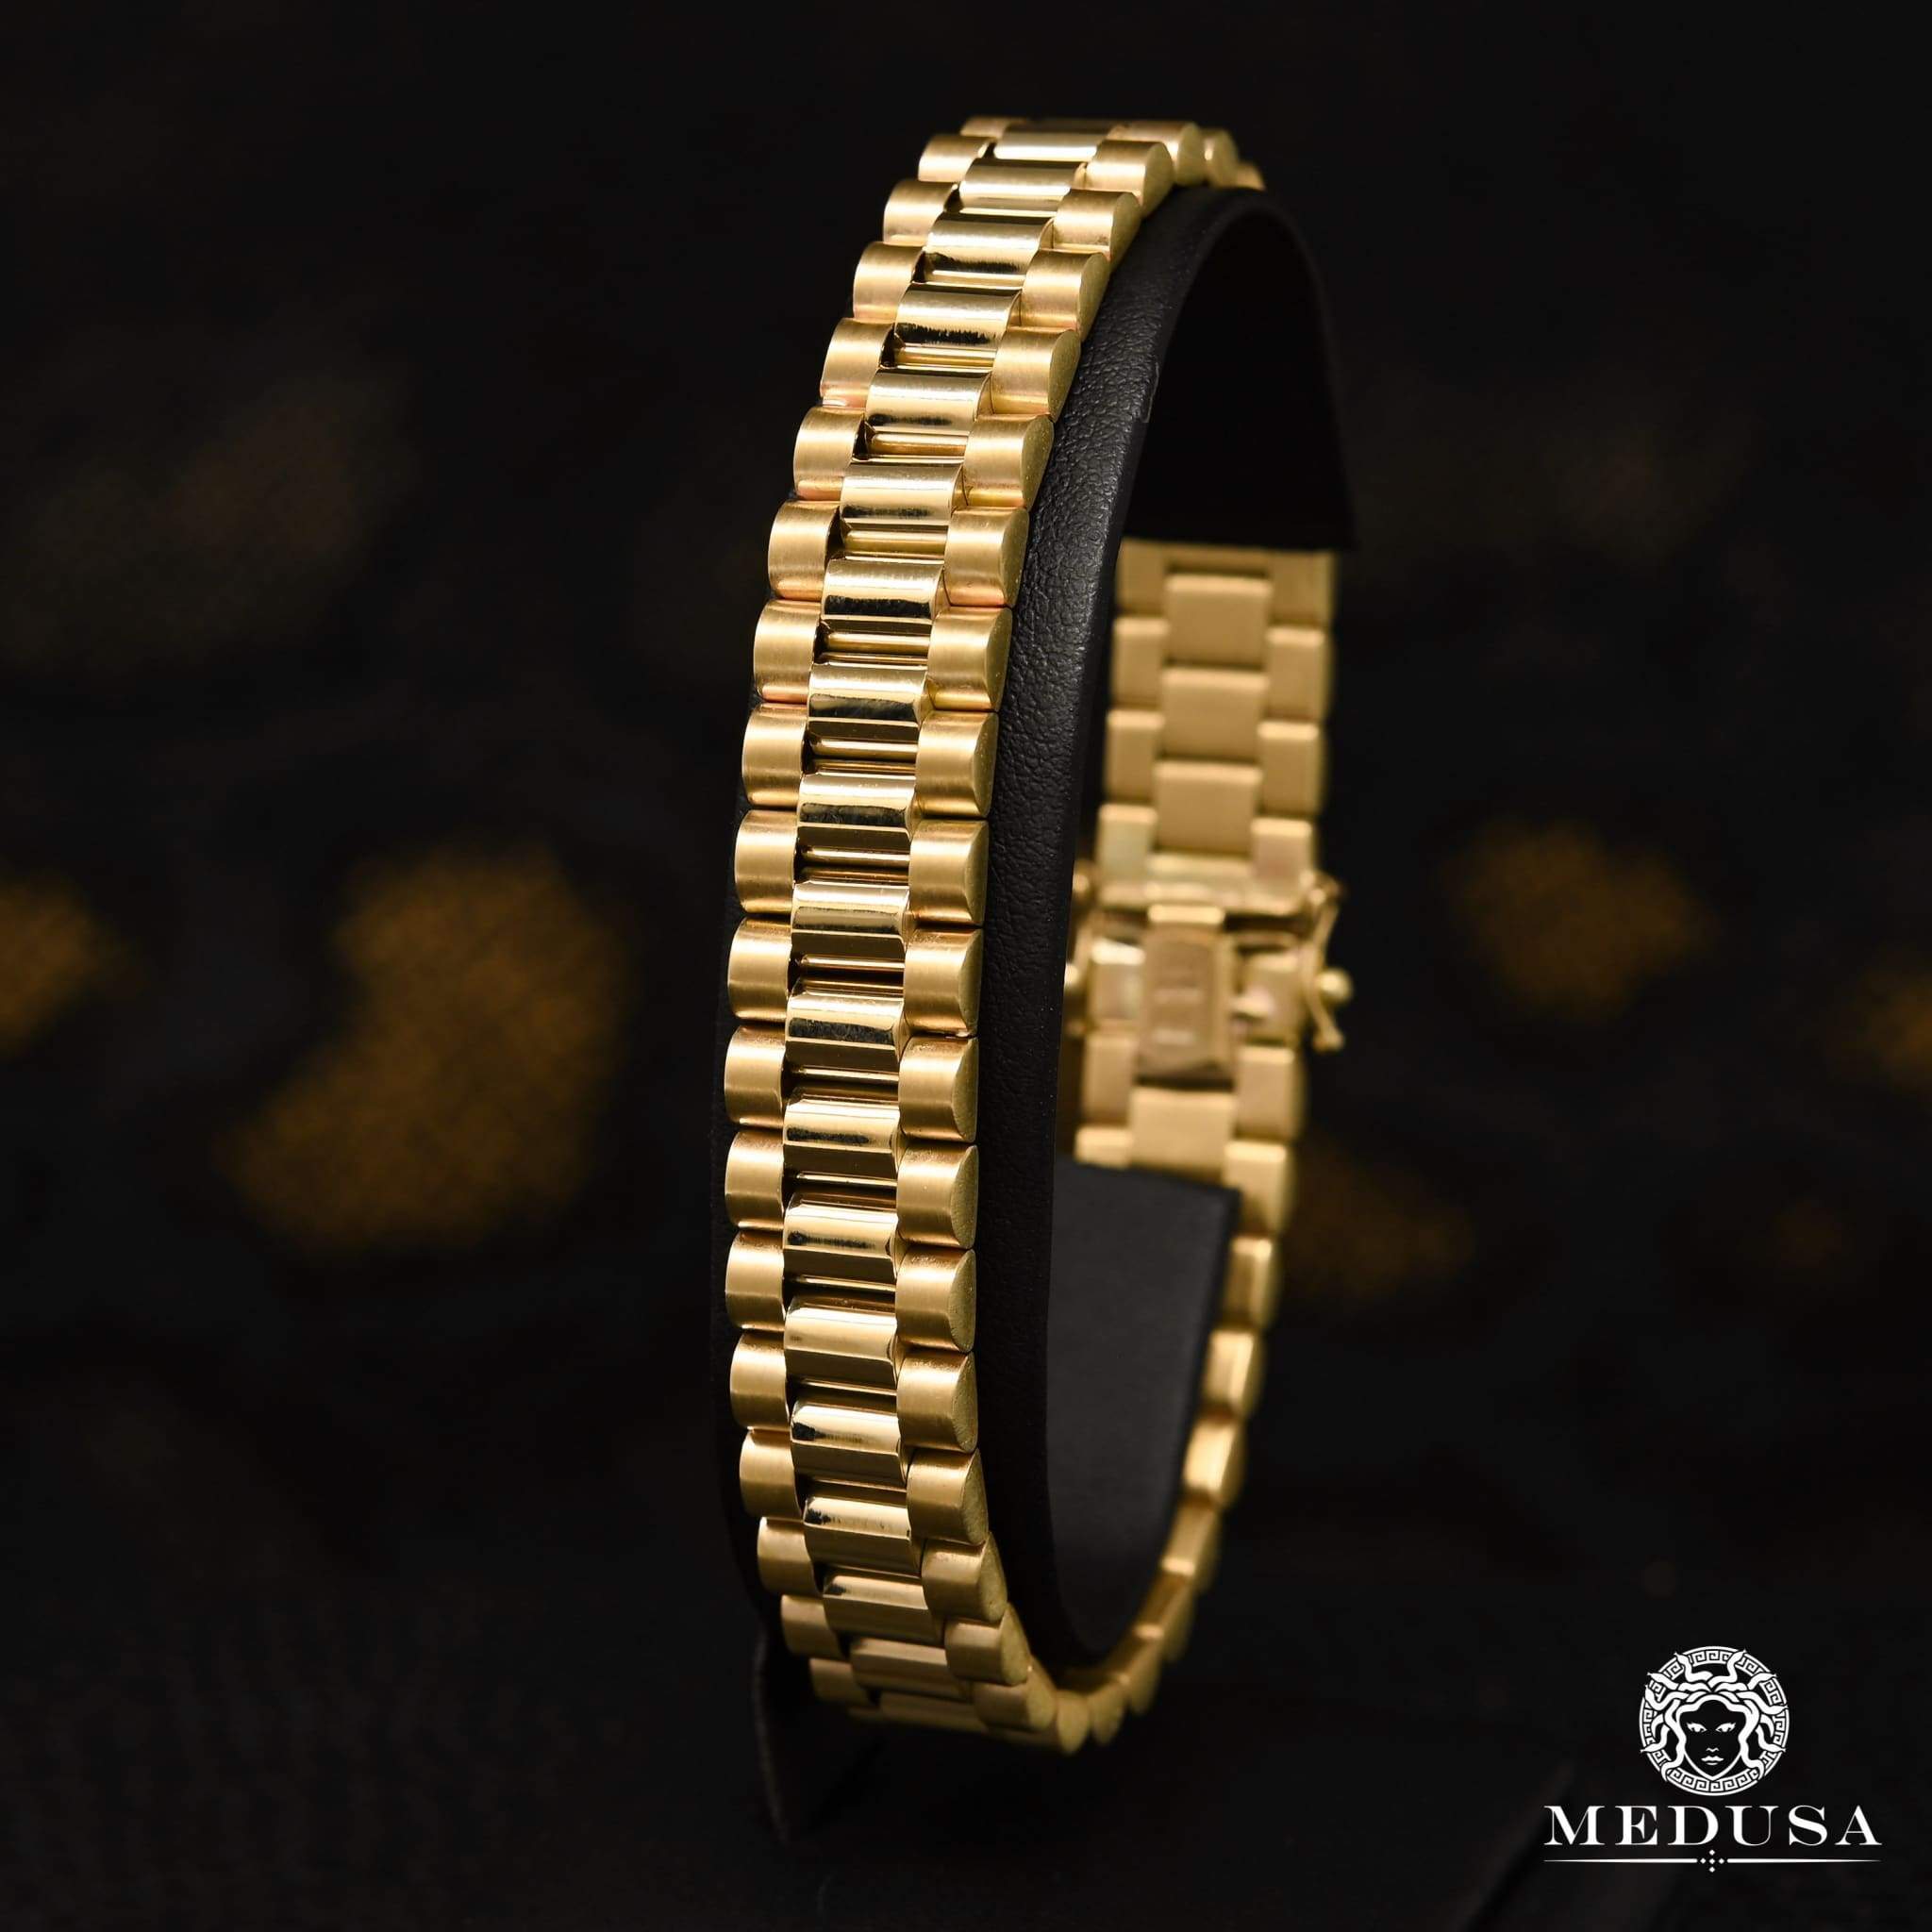 10k Gold Rolex Chain Link Bracelet Anklet for Men Women | eBay